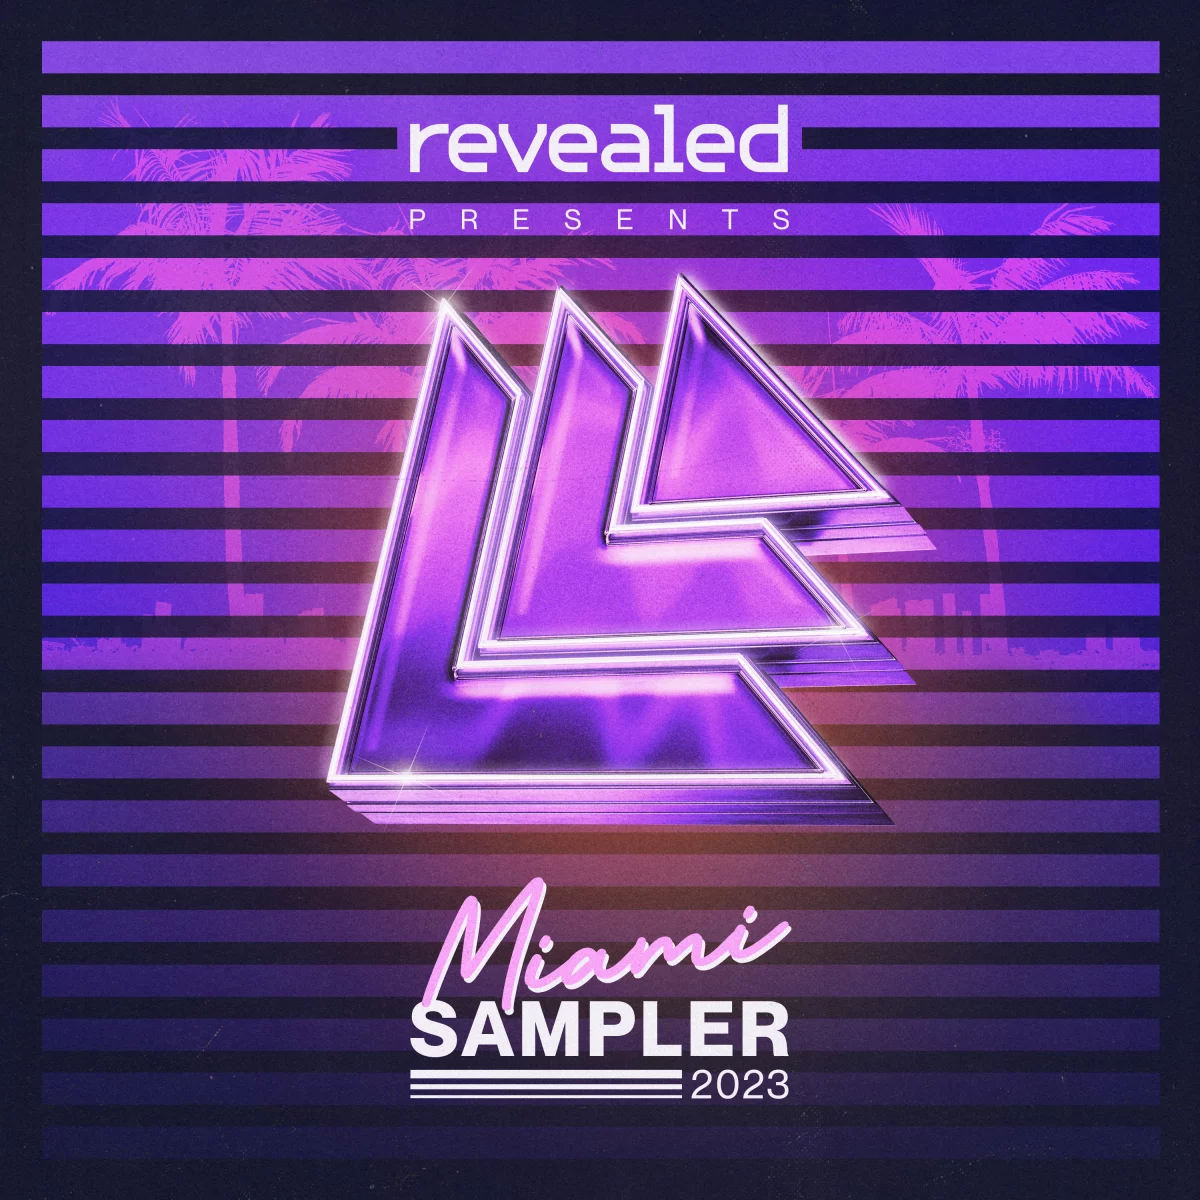 Revealed Recordings presents Miami Sampler 2023 - revealedrec⁠